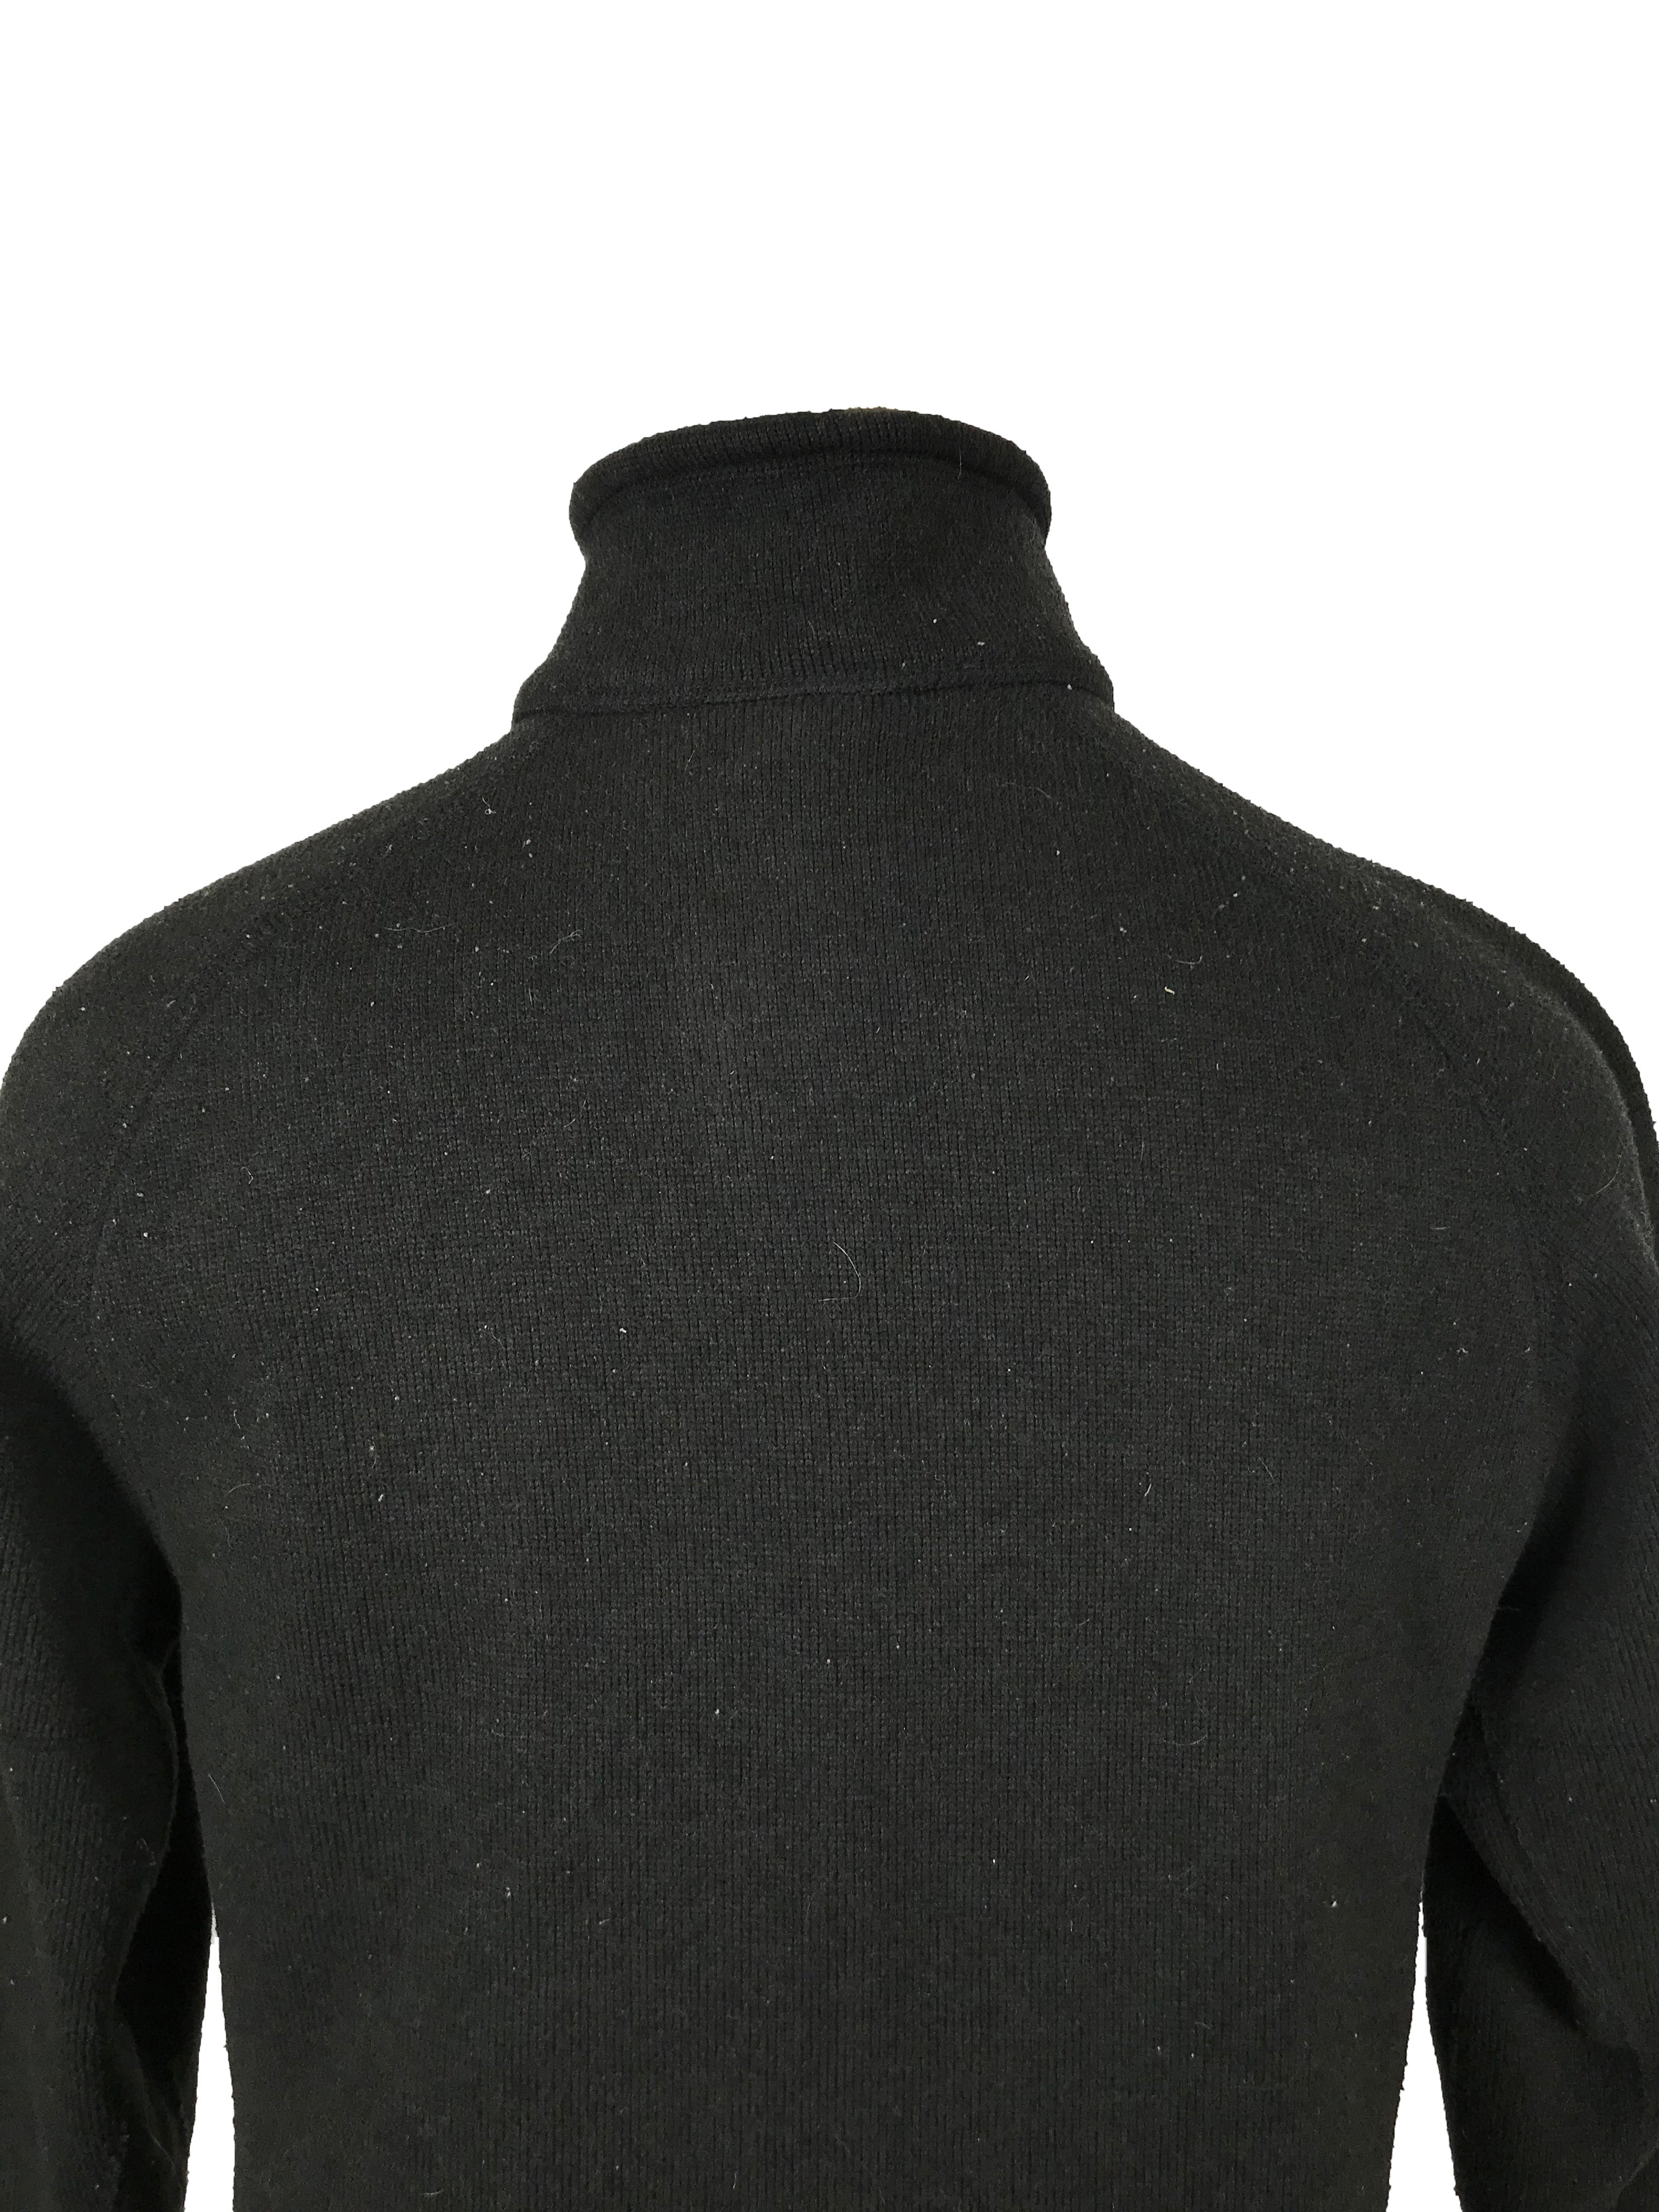 The North Face Black Jacket Men's Size S